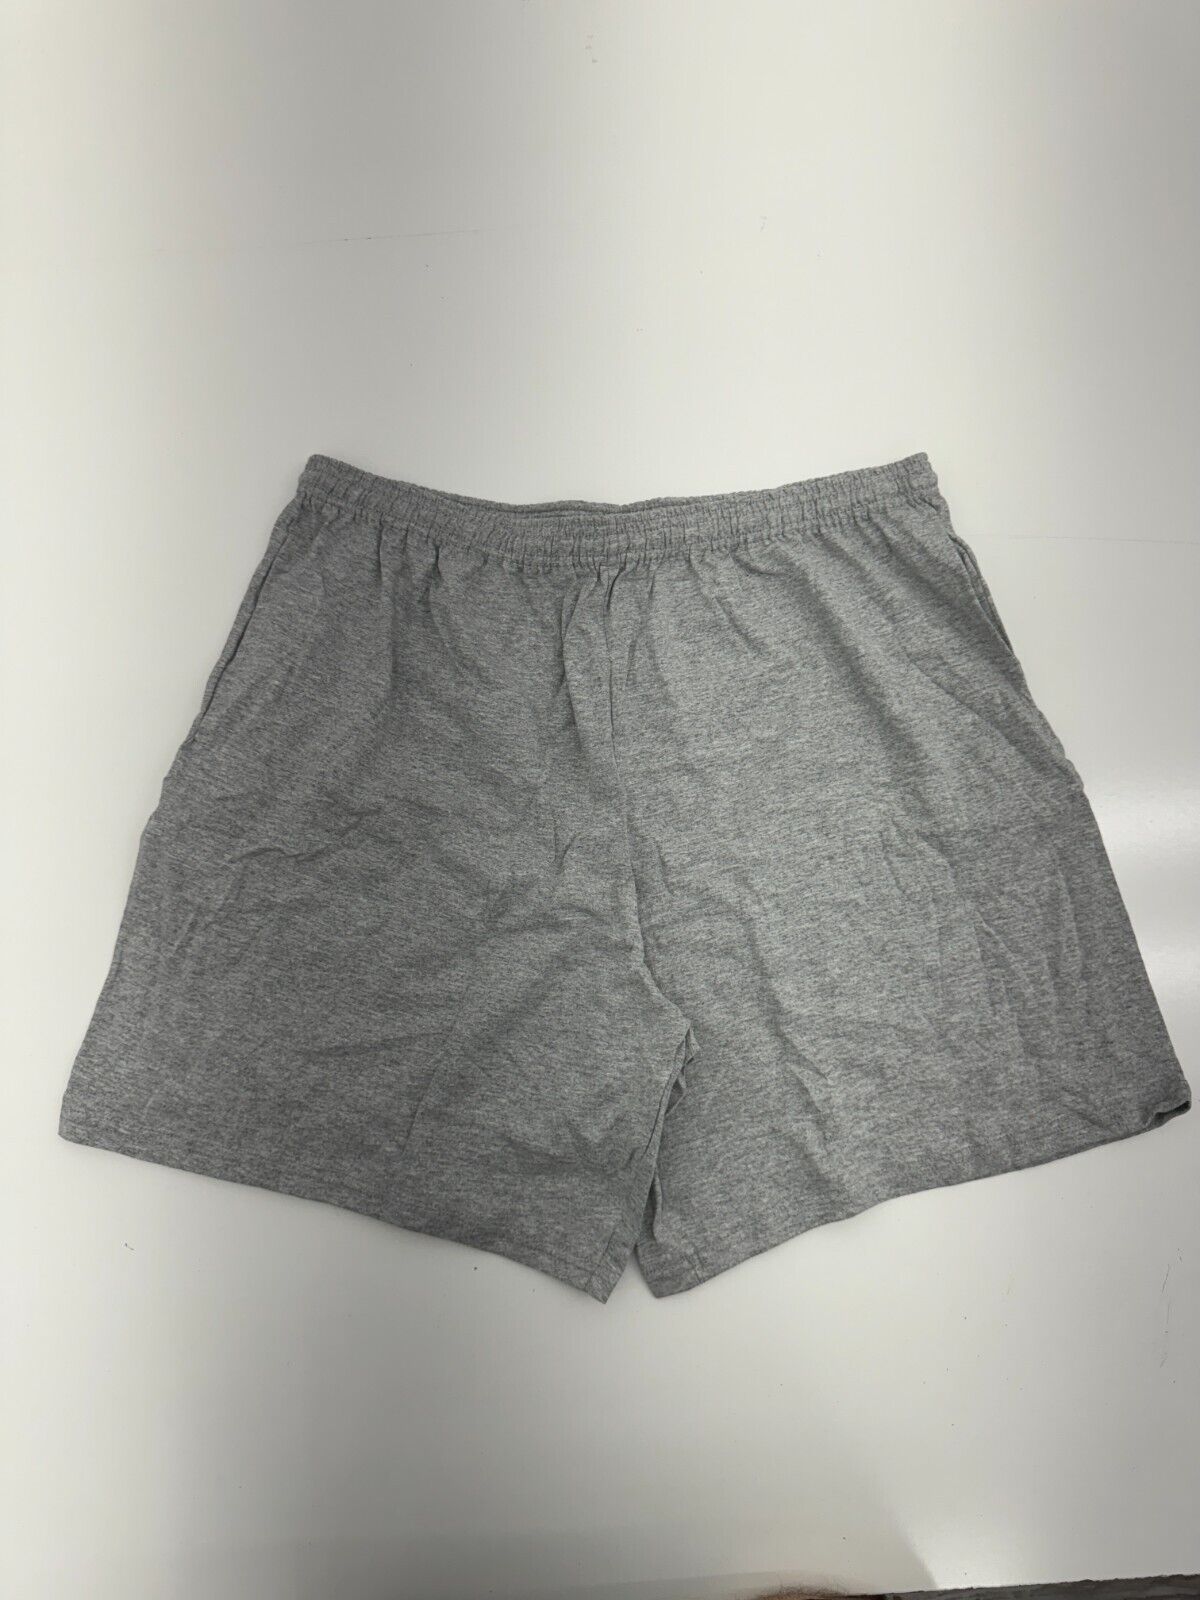 Hanes Mens Grey Sweat Shorts Size XL